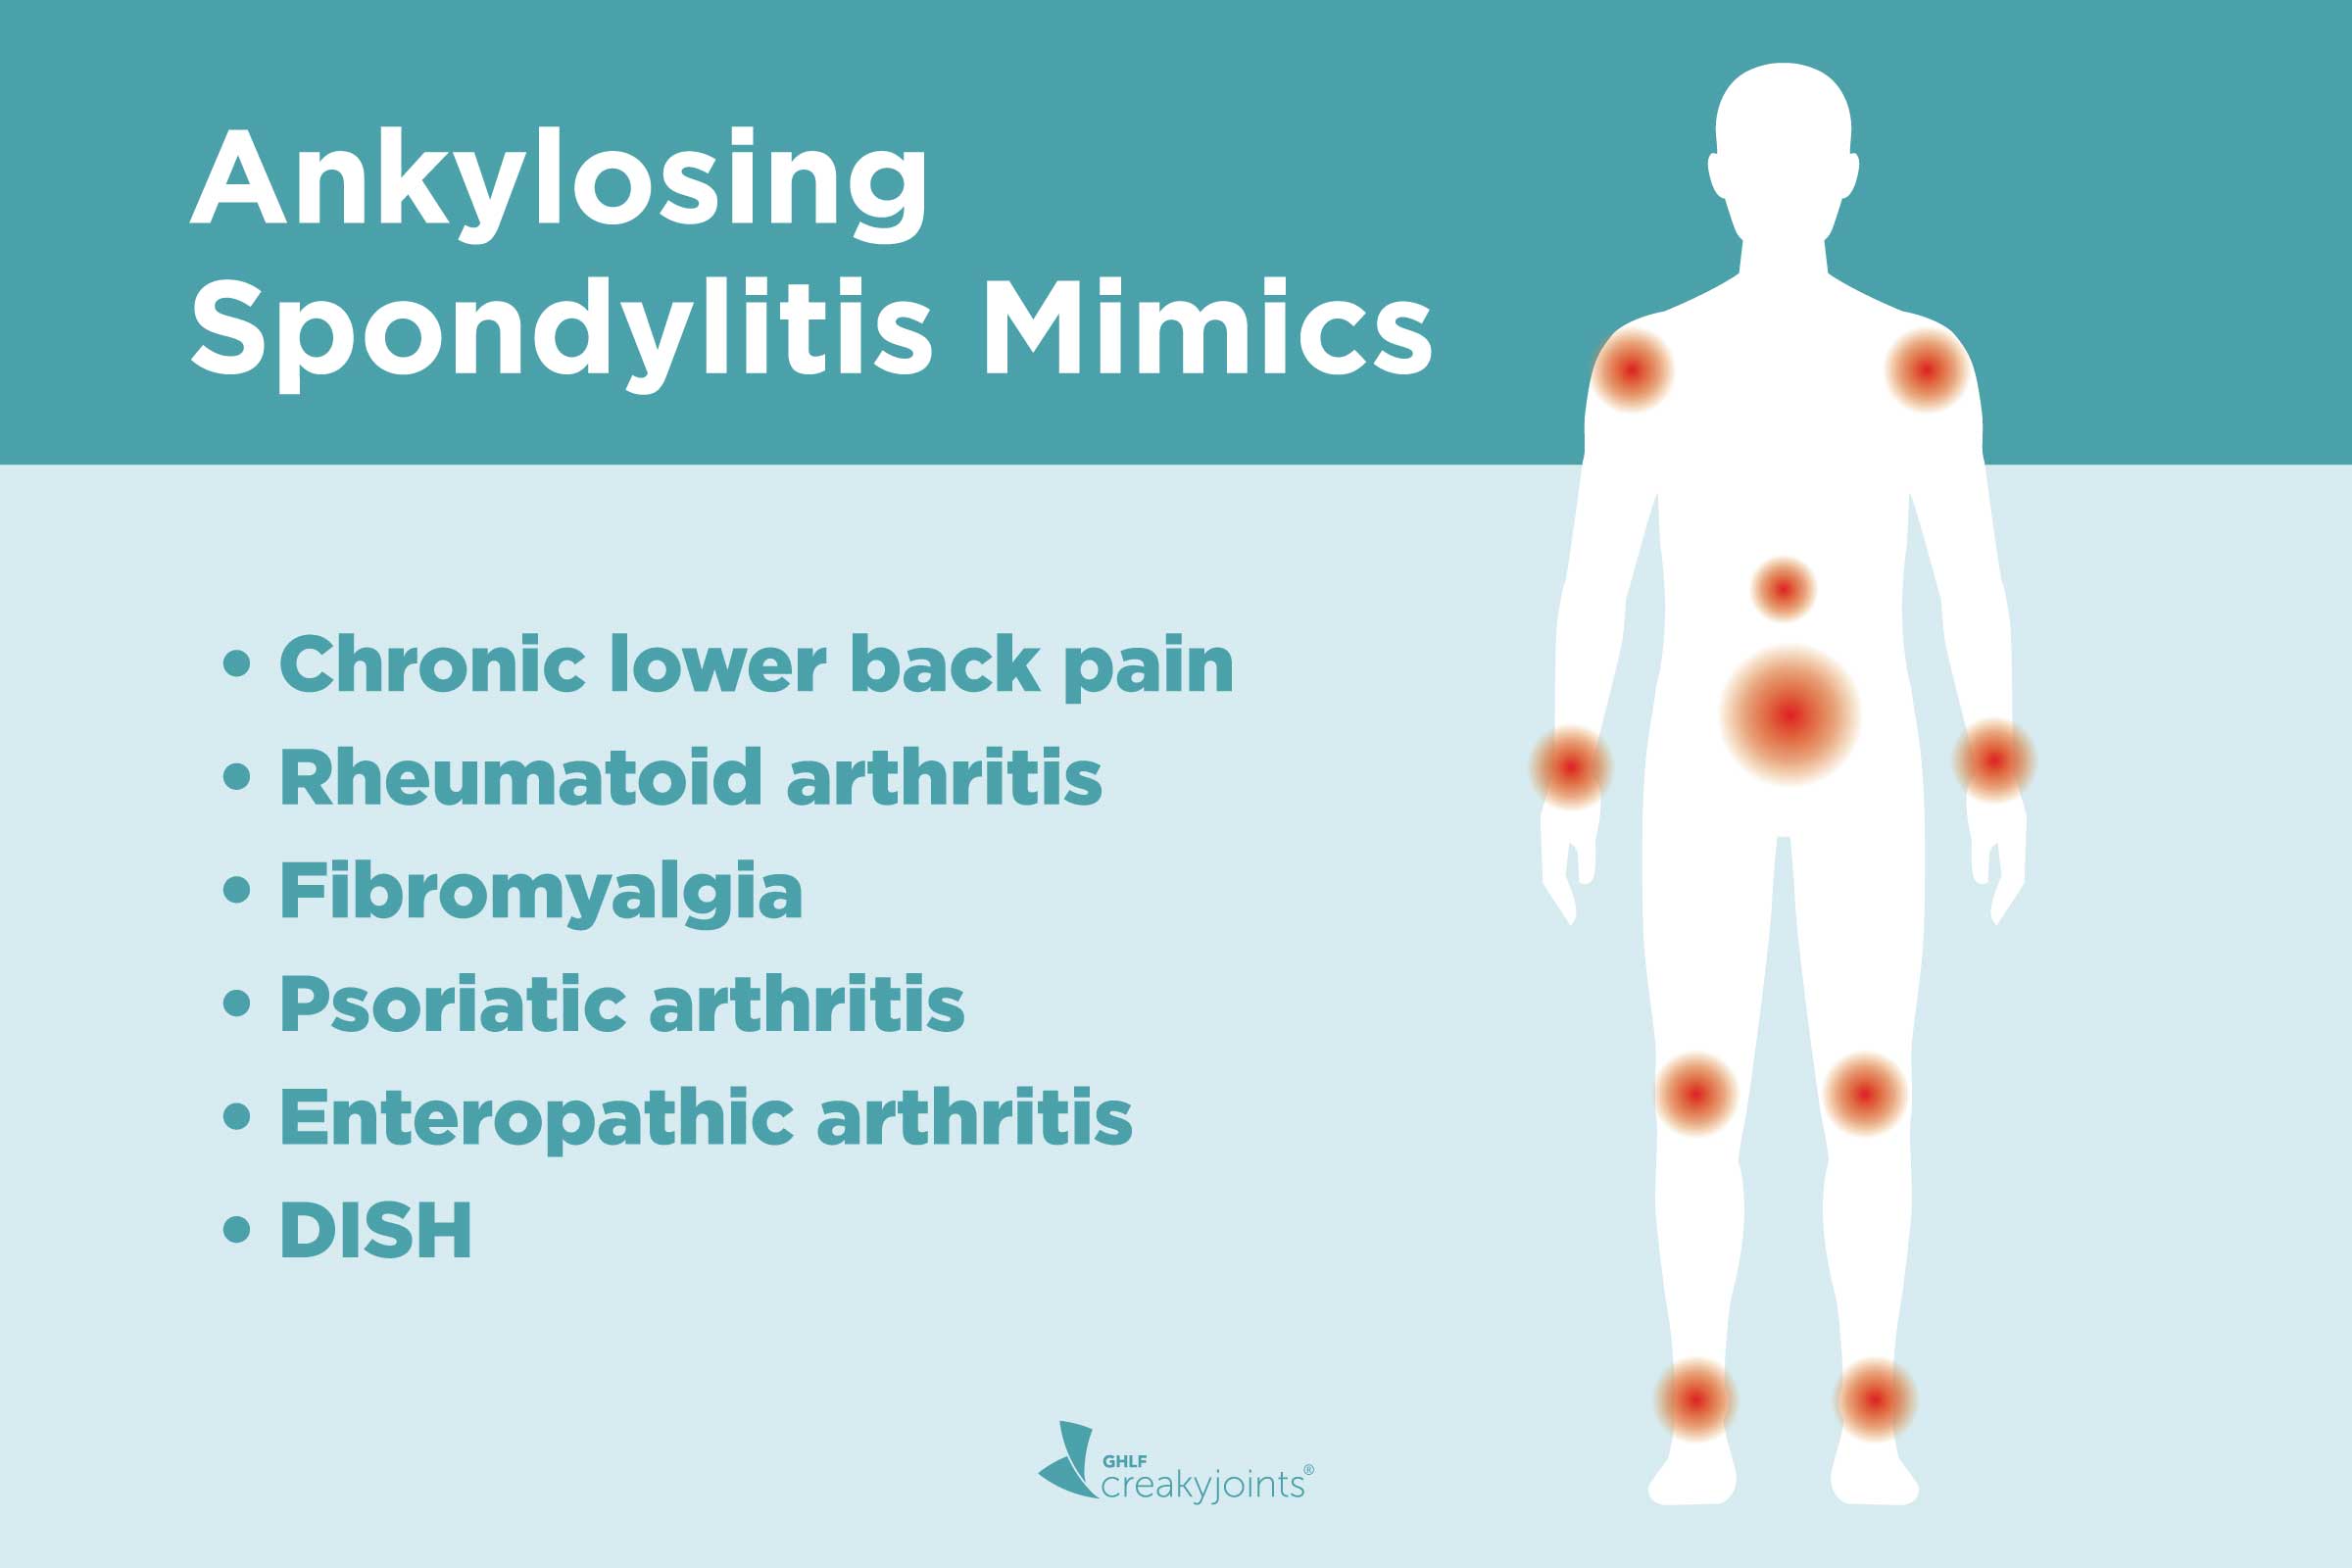 Ankylosing Spondylitis: More than Just a “Bad Back”